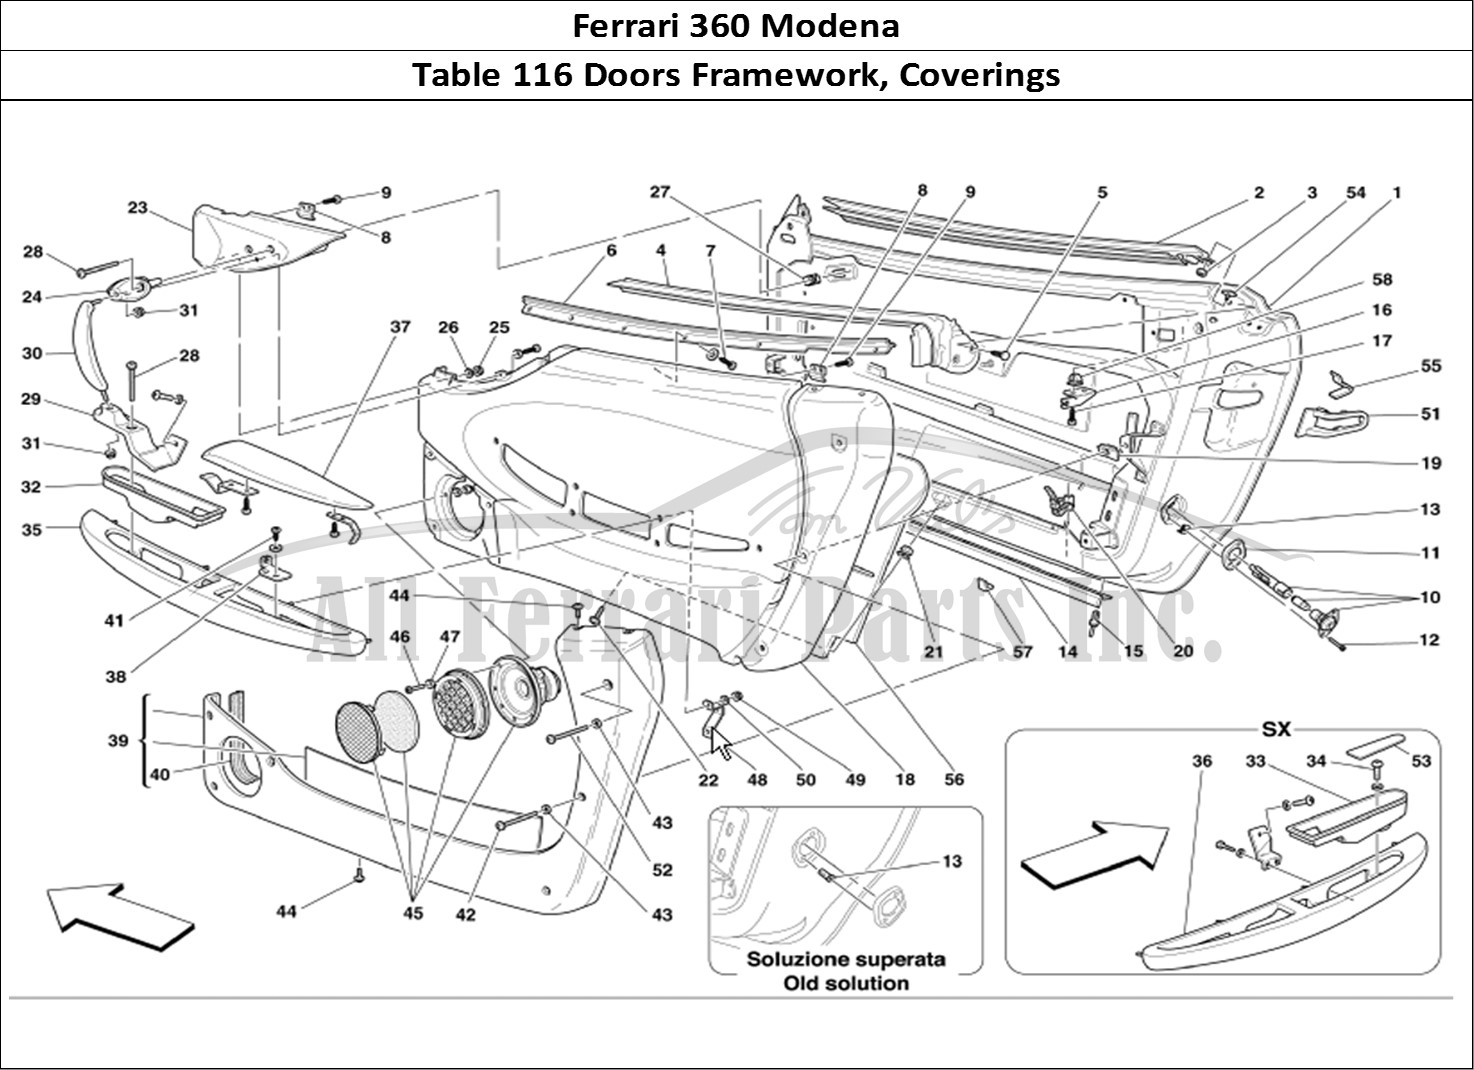 Ferrari Parts Ferrari 360 Modena Page 116 Doors Framework and Cover